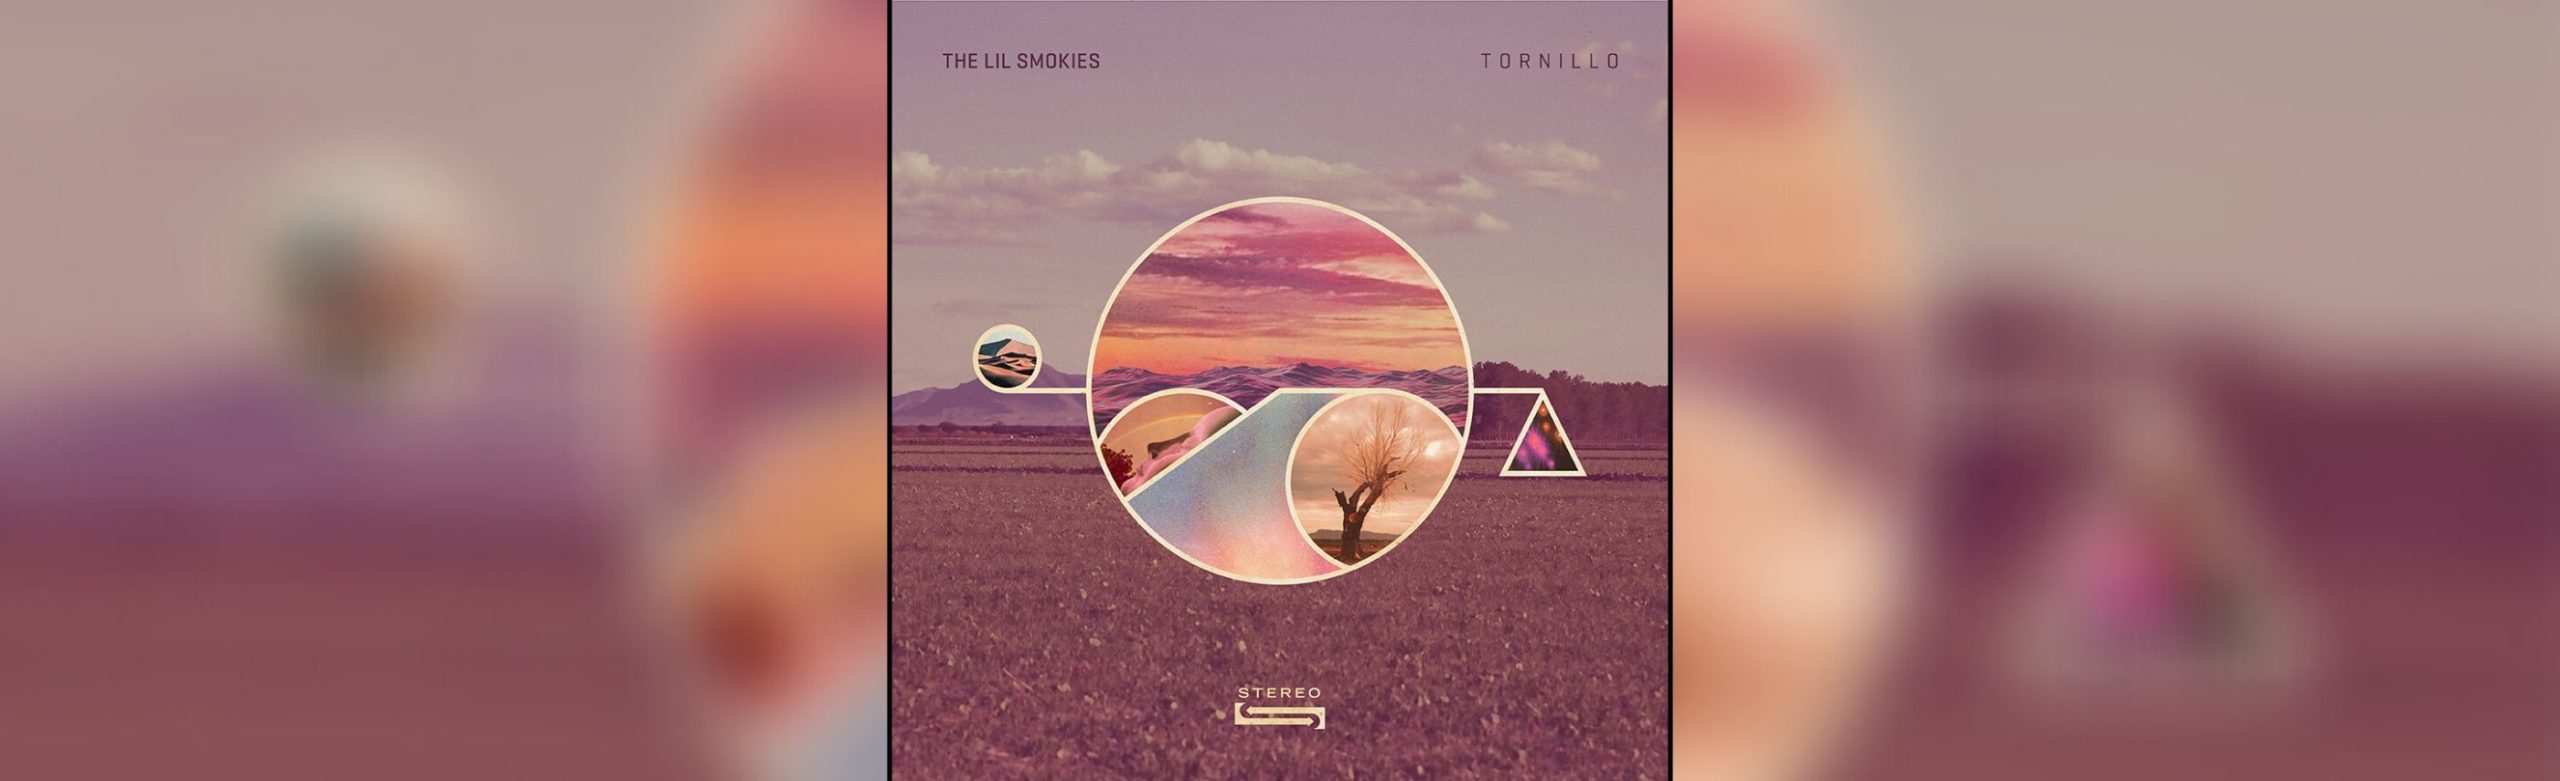 The Lil Smokies Announce New Album “Tornillo” Image